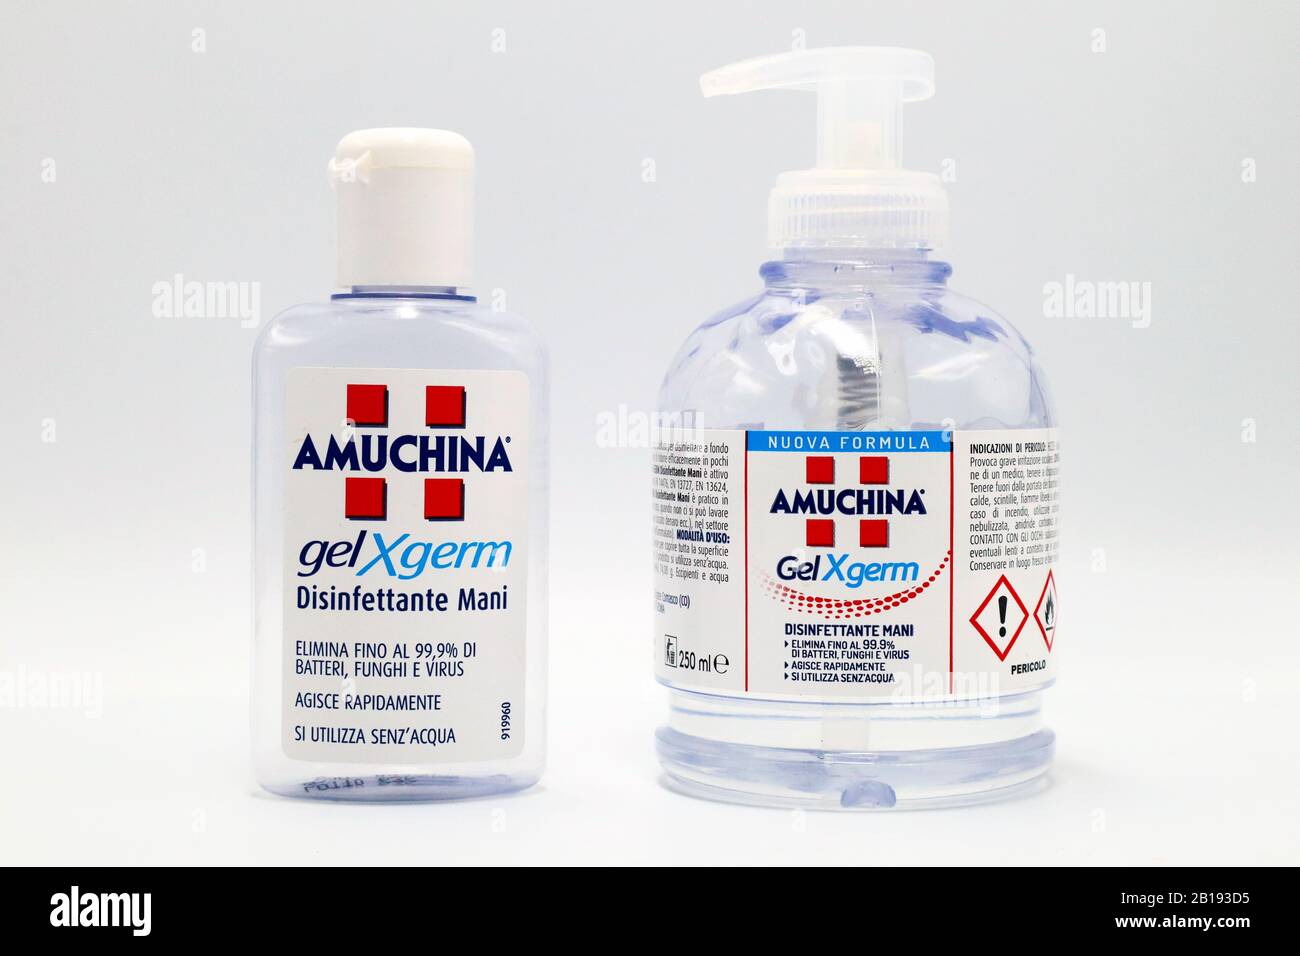 AMUCHINA Gel XGERM Hand Sanitizer. Liquid used to decrease infectious agent  Virus, Fungi and Bacteria. AMUCHINA is an Italian brand of ACRAF ANGELINI  Stock Photo - Alamy